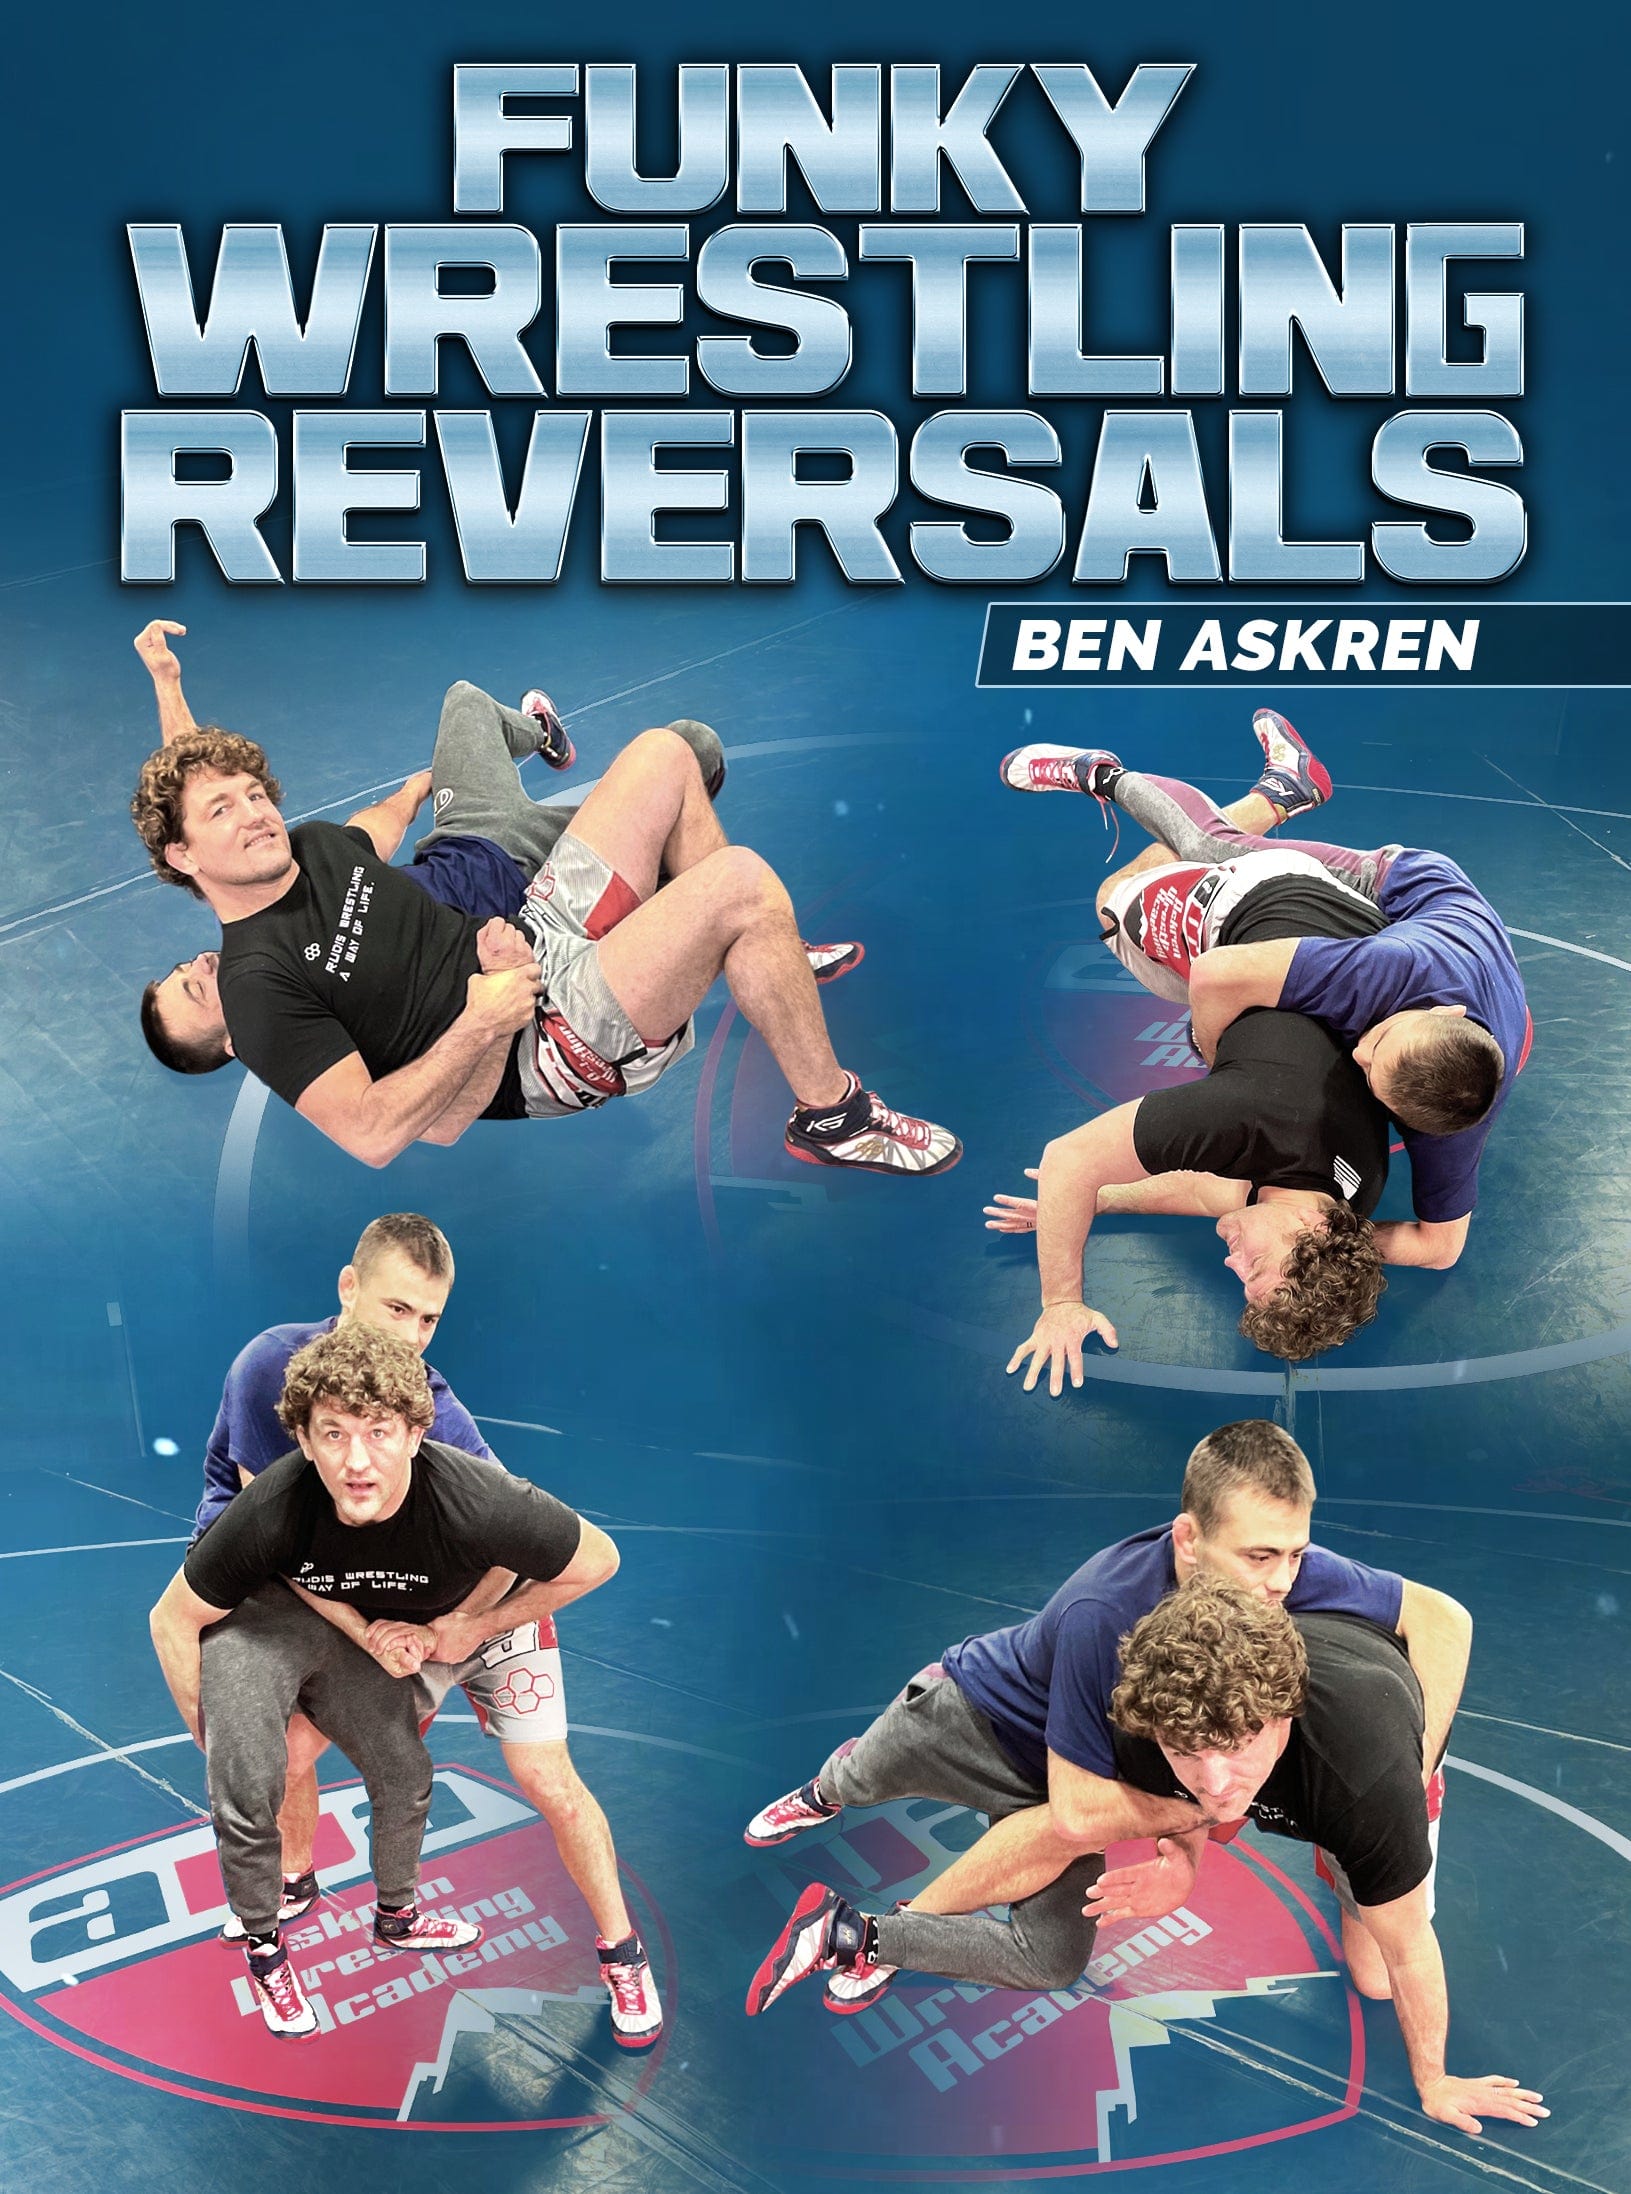 Funky Wrestling Reversals by Ben Askren - Fanatic Wrestling